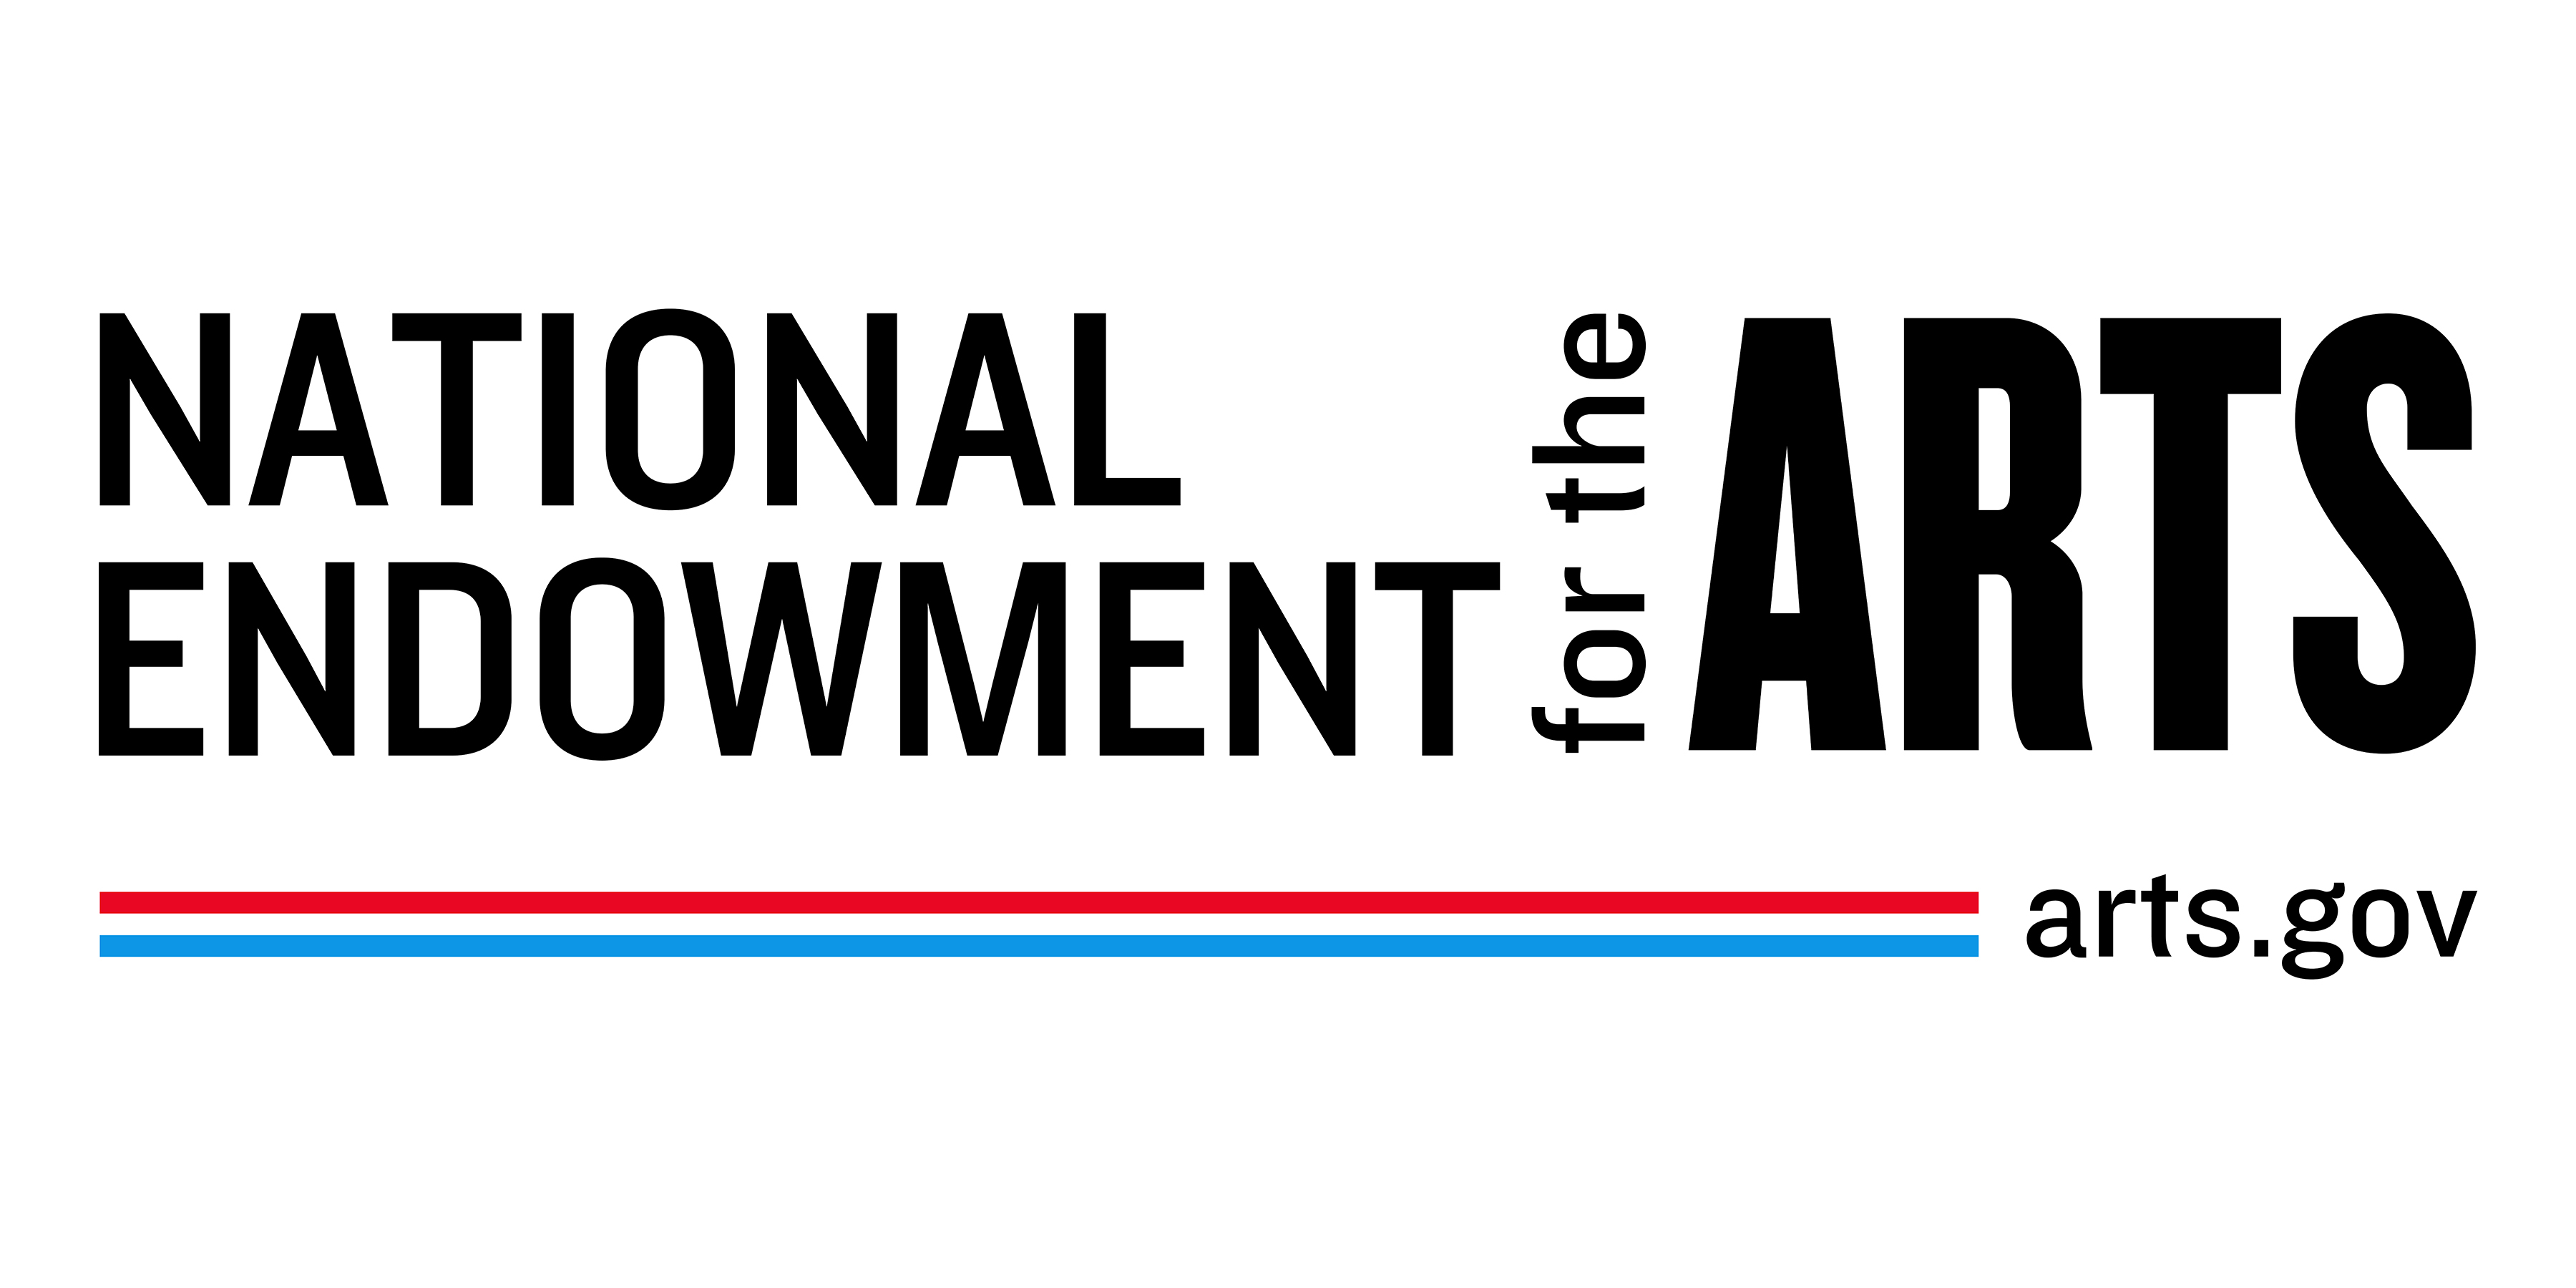 Thumbnail photo: National Endowment for the Arts